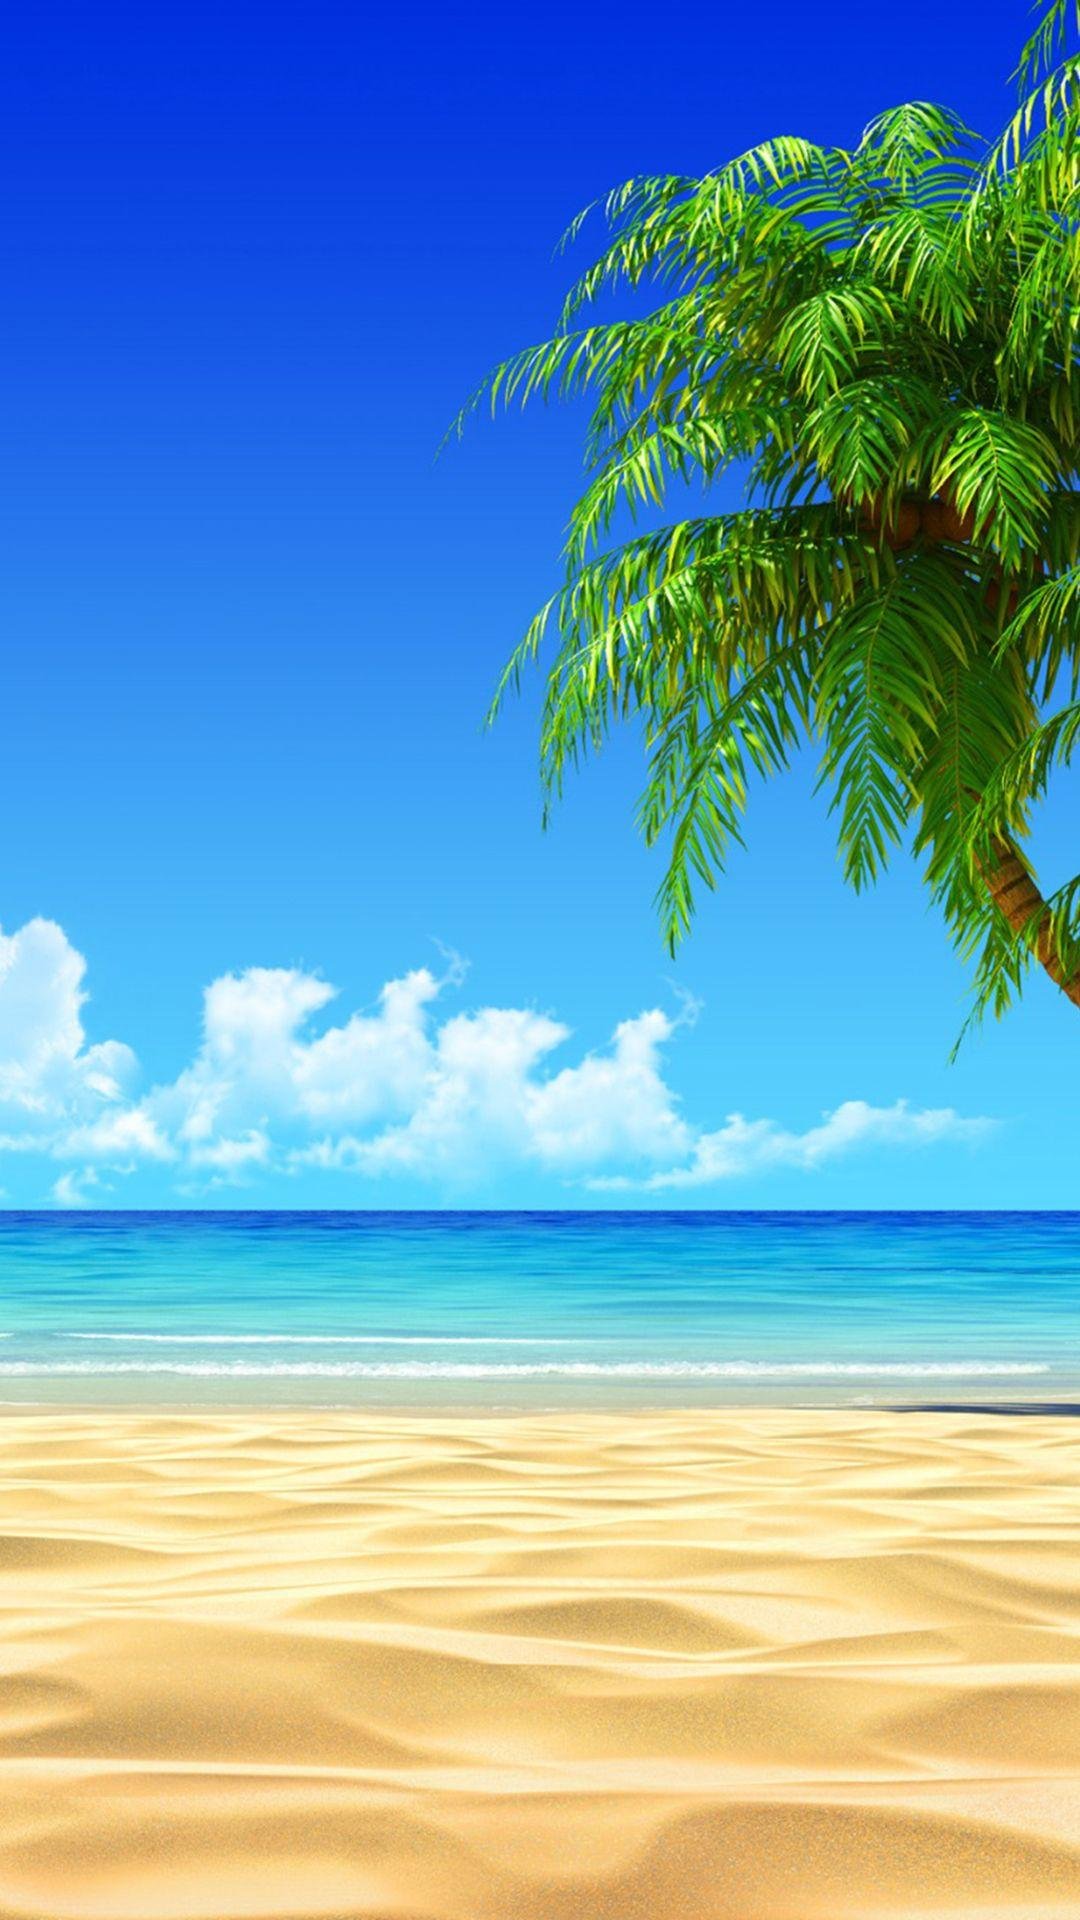 Beach Coconut Tree Wallpaper Download | MobCup